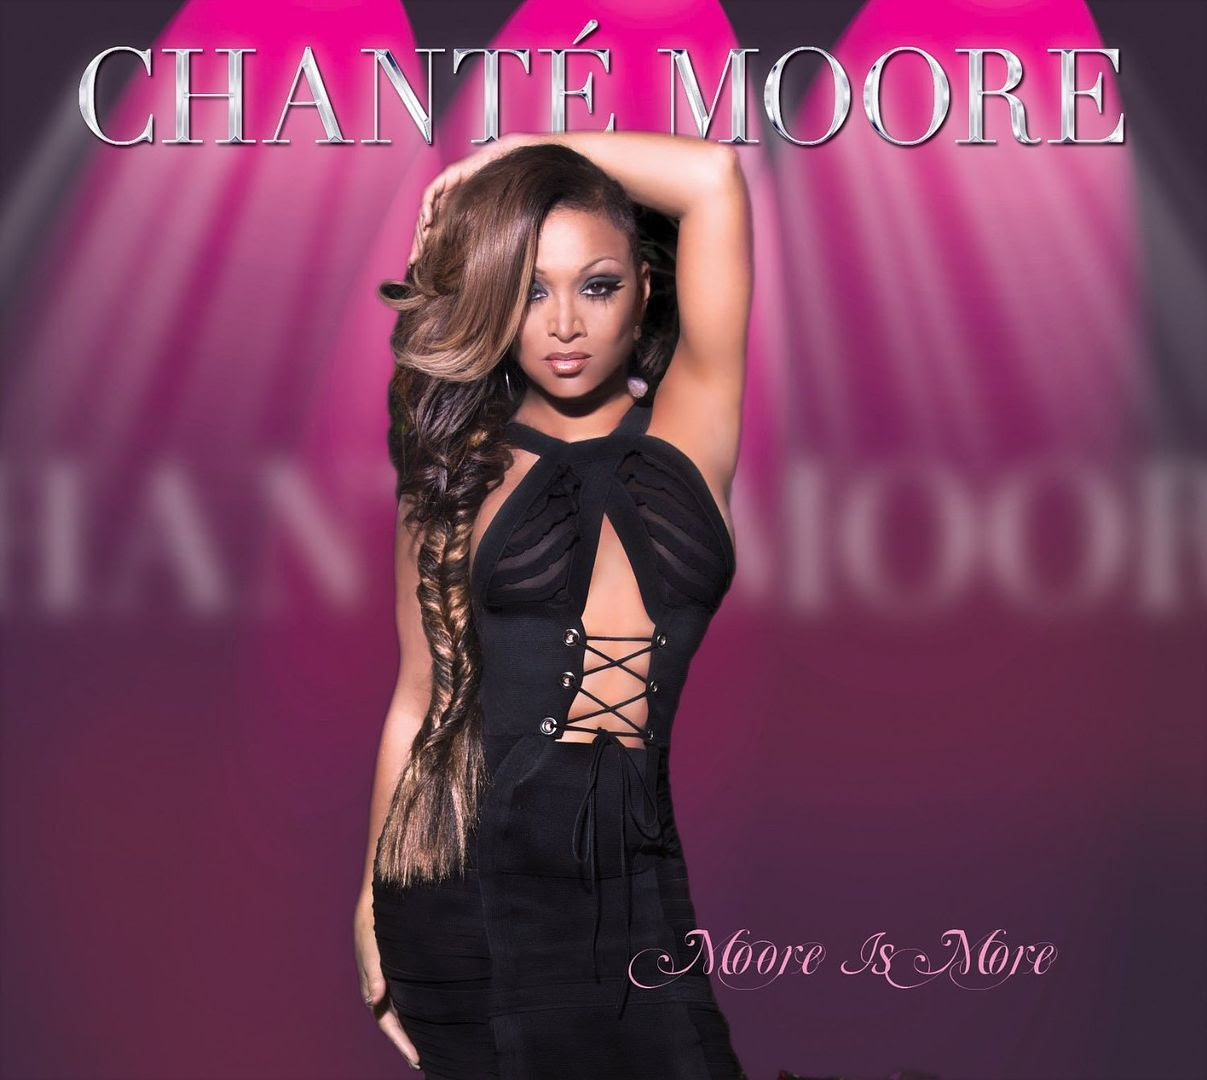 Chante Moore : Moore Is More (Album Cover) photo 71klSEdgOfL_SL1500_.jpg